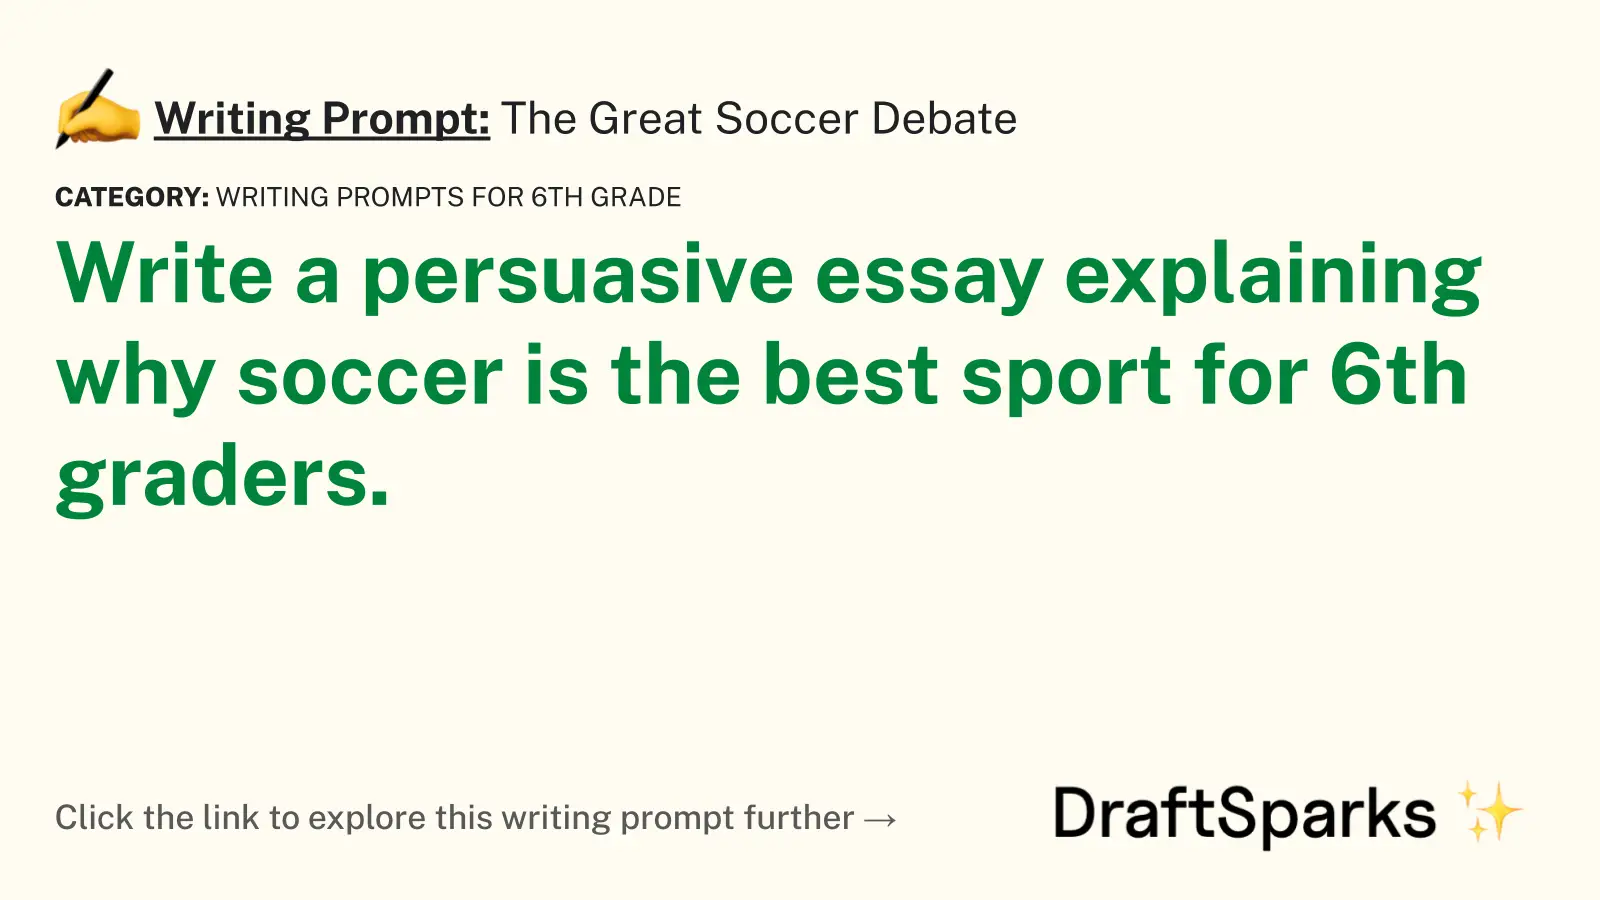 The Great Soccer Debate